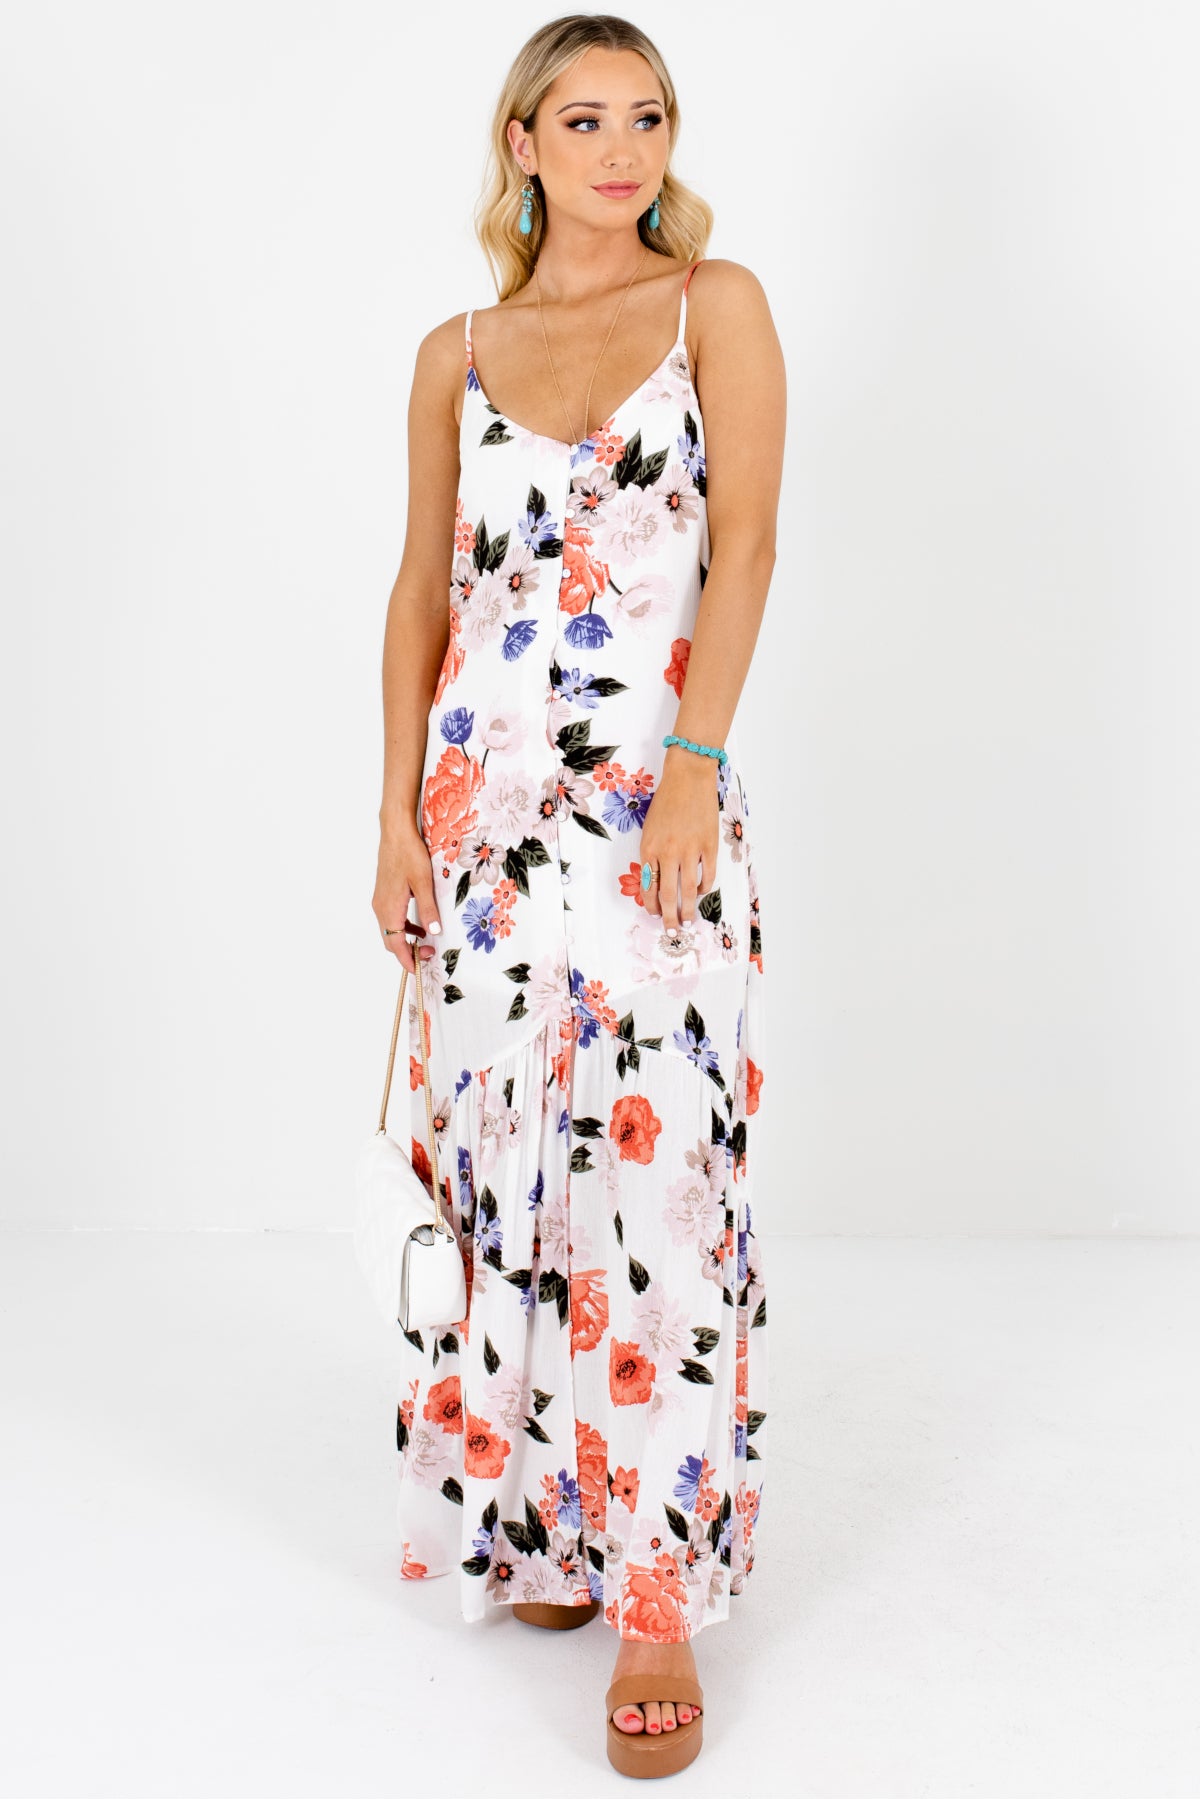 White Floral Print Button Up Maxi Dresses Affordable Online Boutique